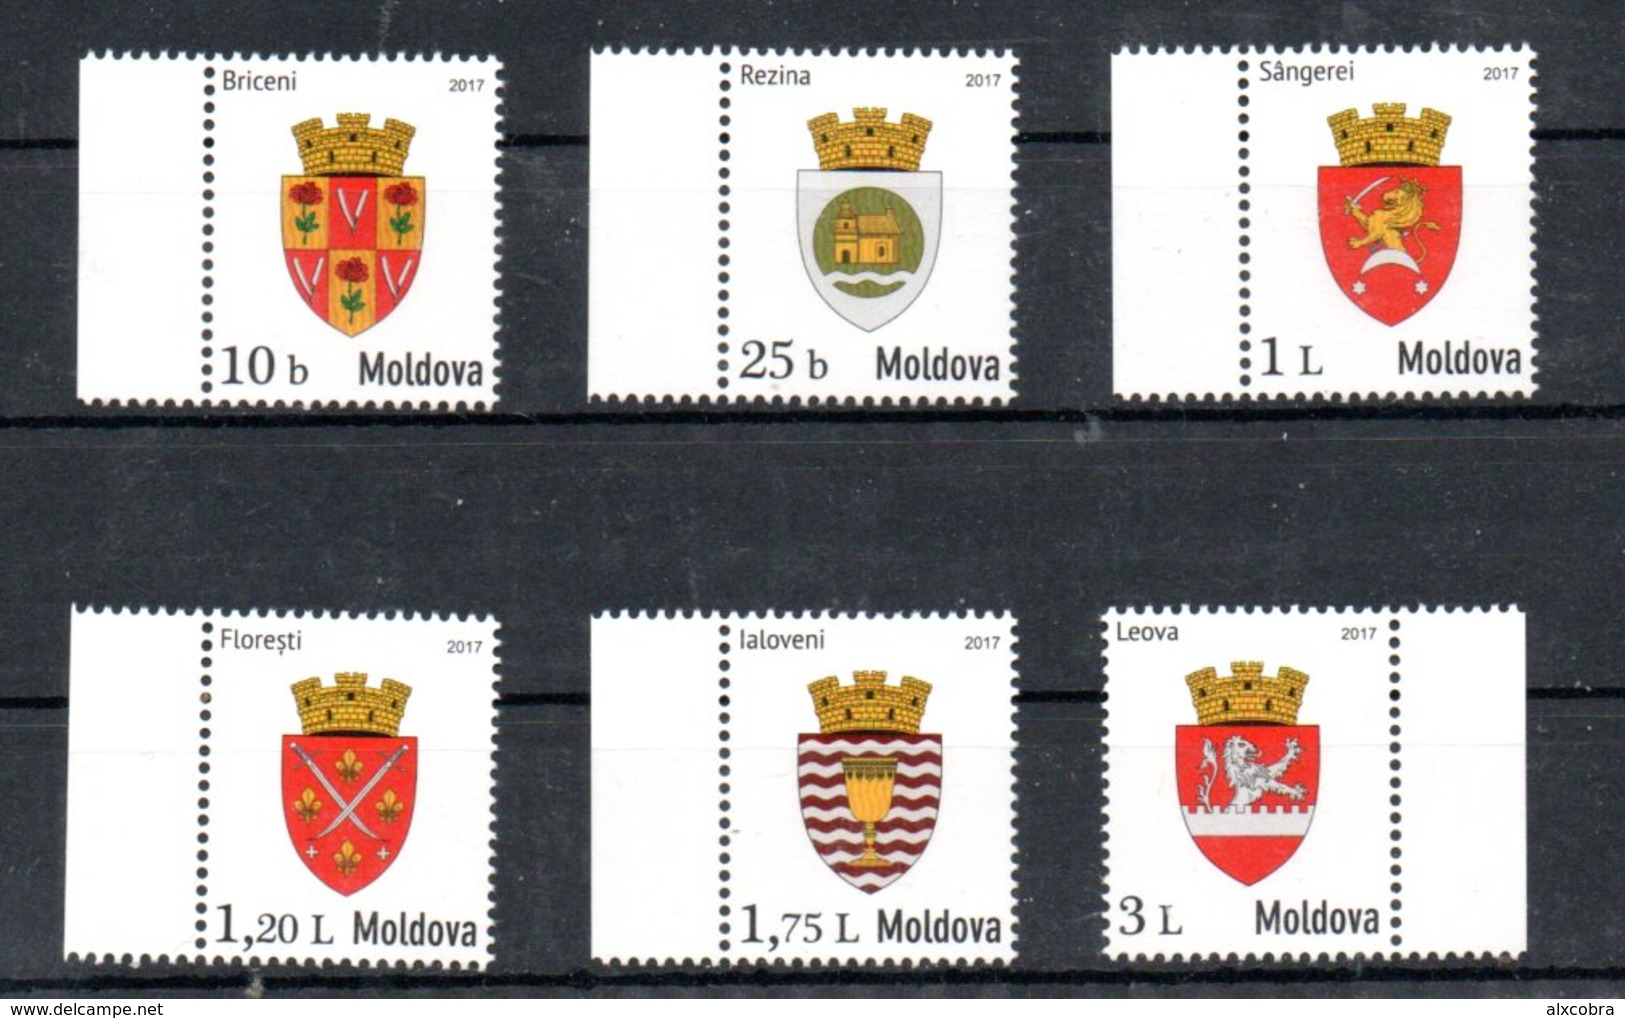 Moldavia Moldova Coat Of Arms 2017 MNH Michel 991-996 - Stamps